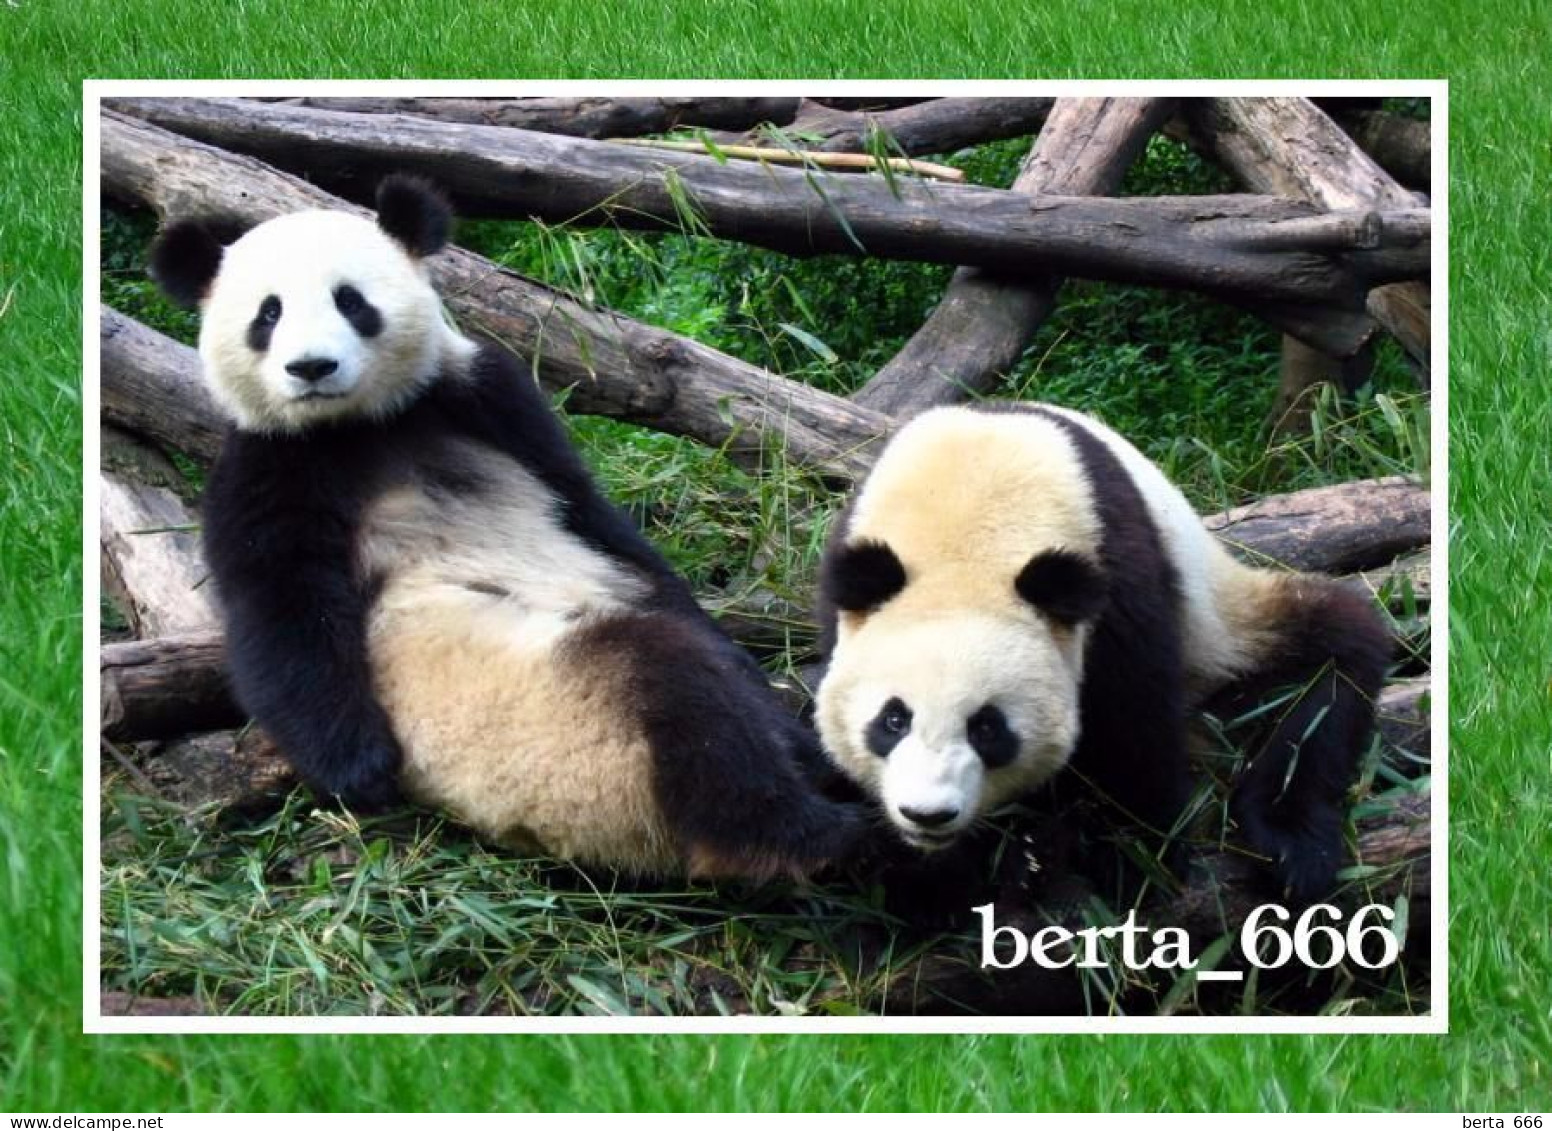 Animals * Giant Panda Bears - Bears